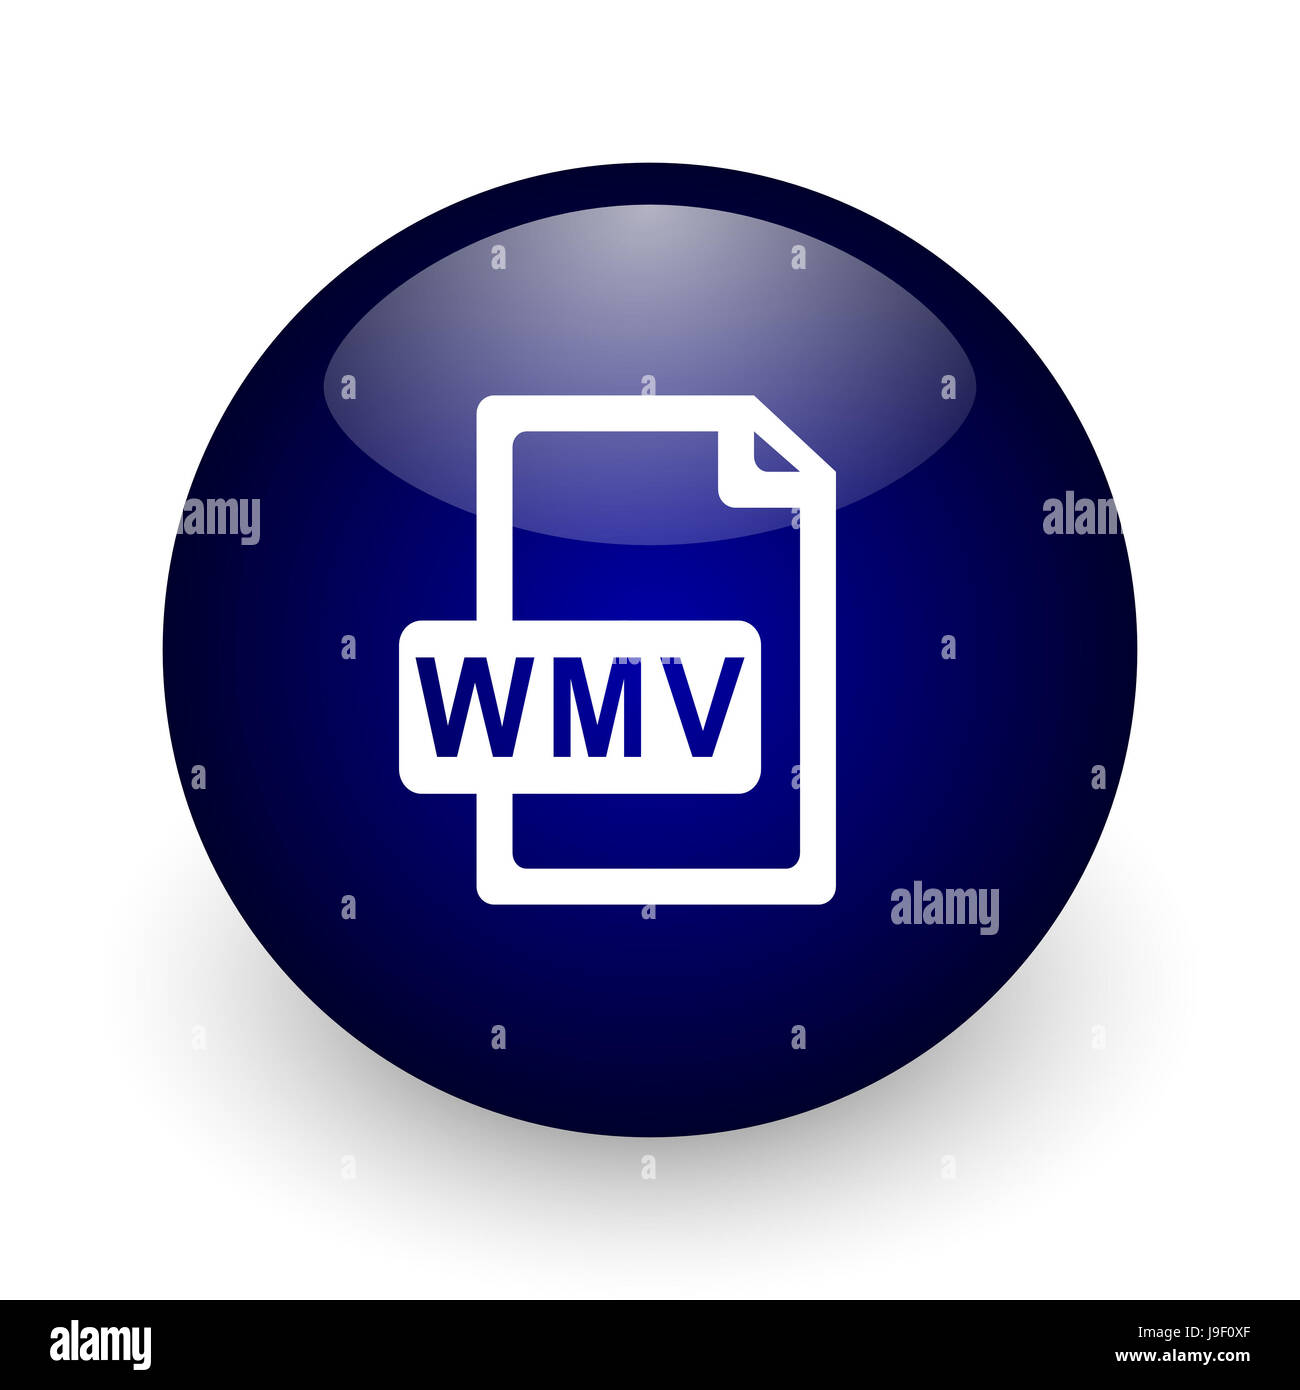 Wmv File Fotos e Imágenes de stock - Alamy